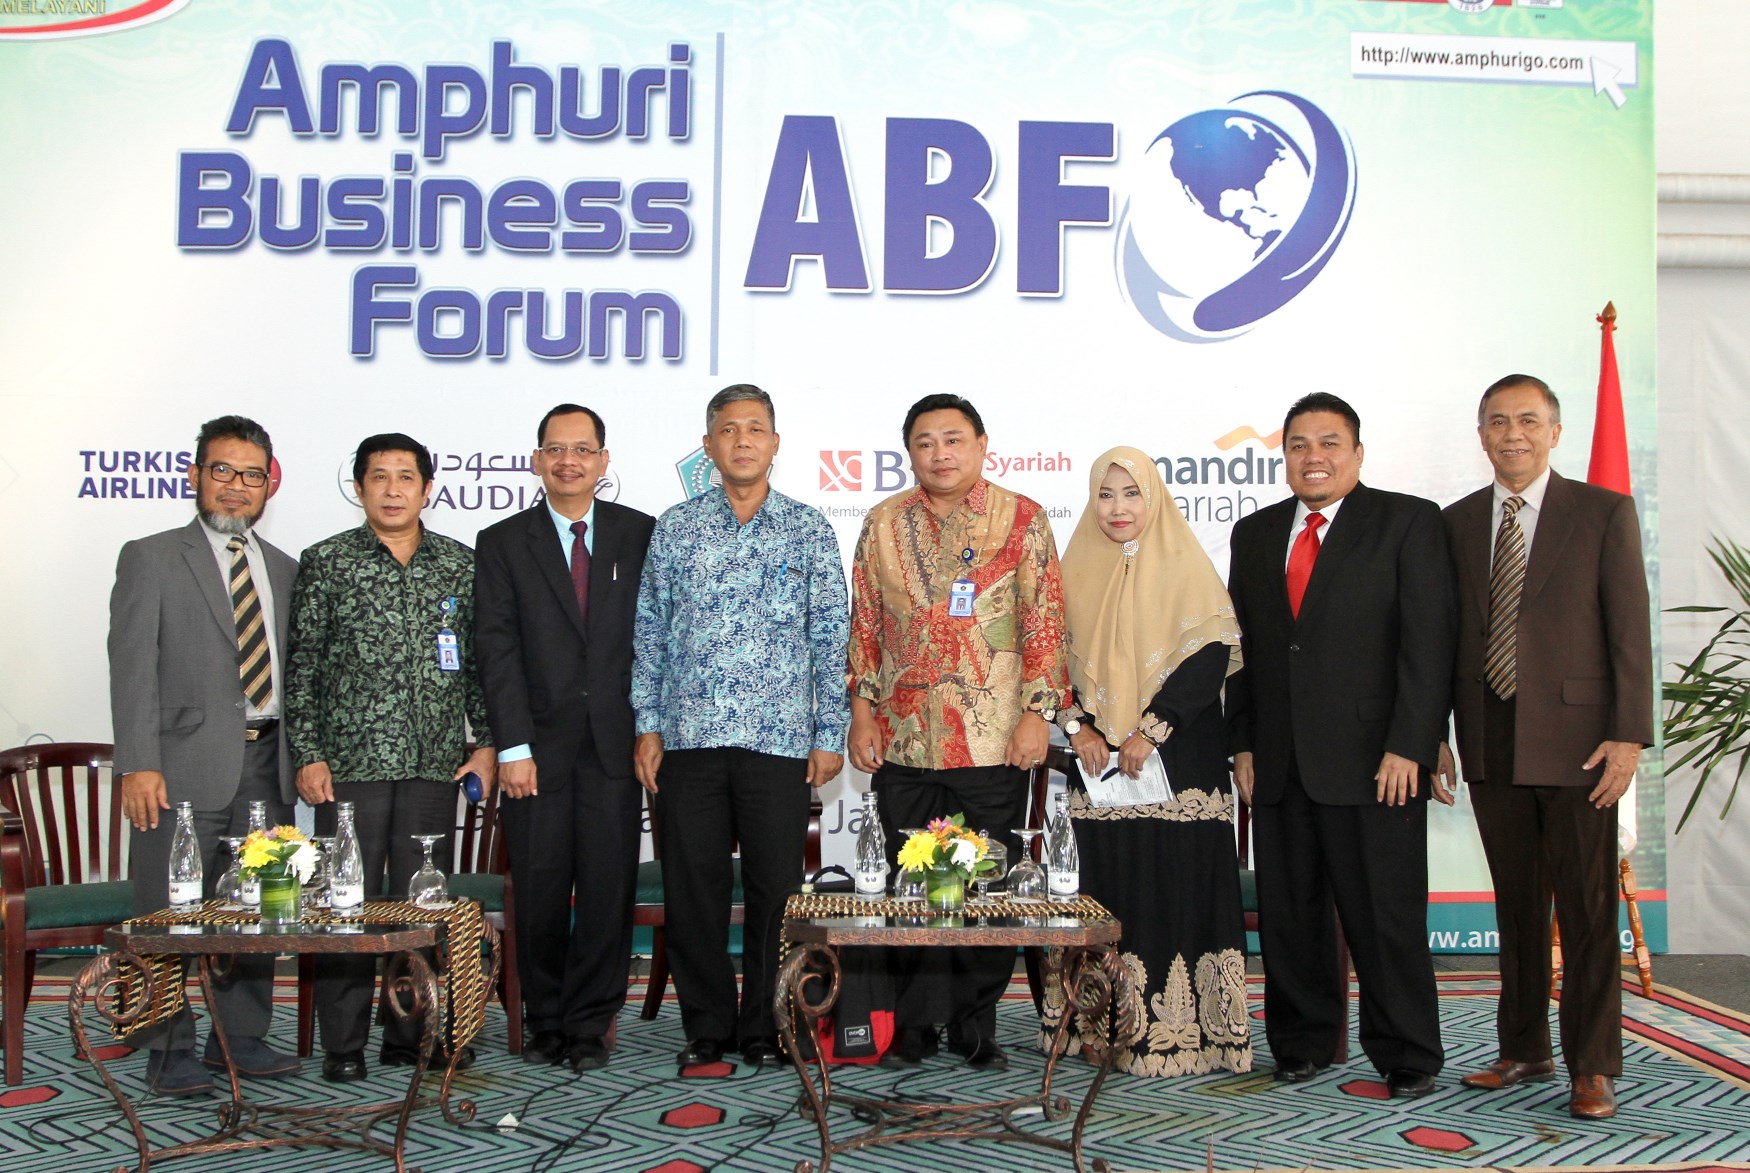 Amphuri Business Forum